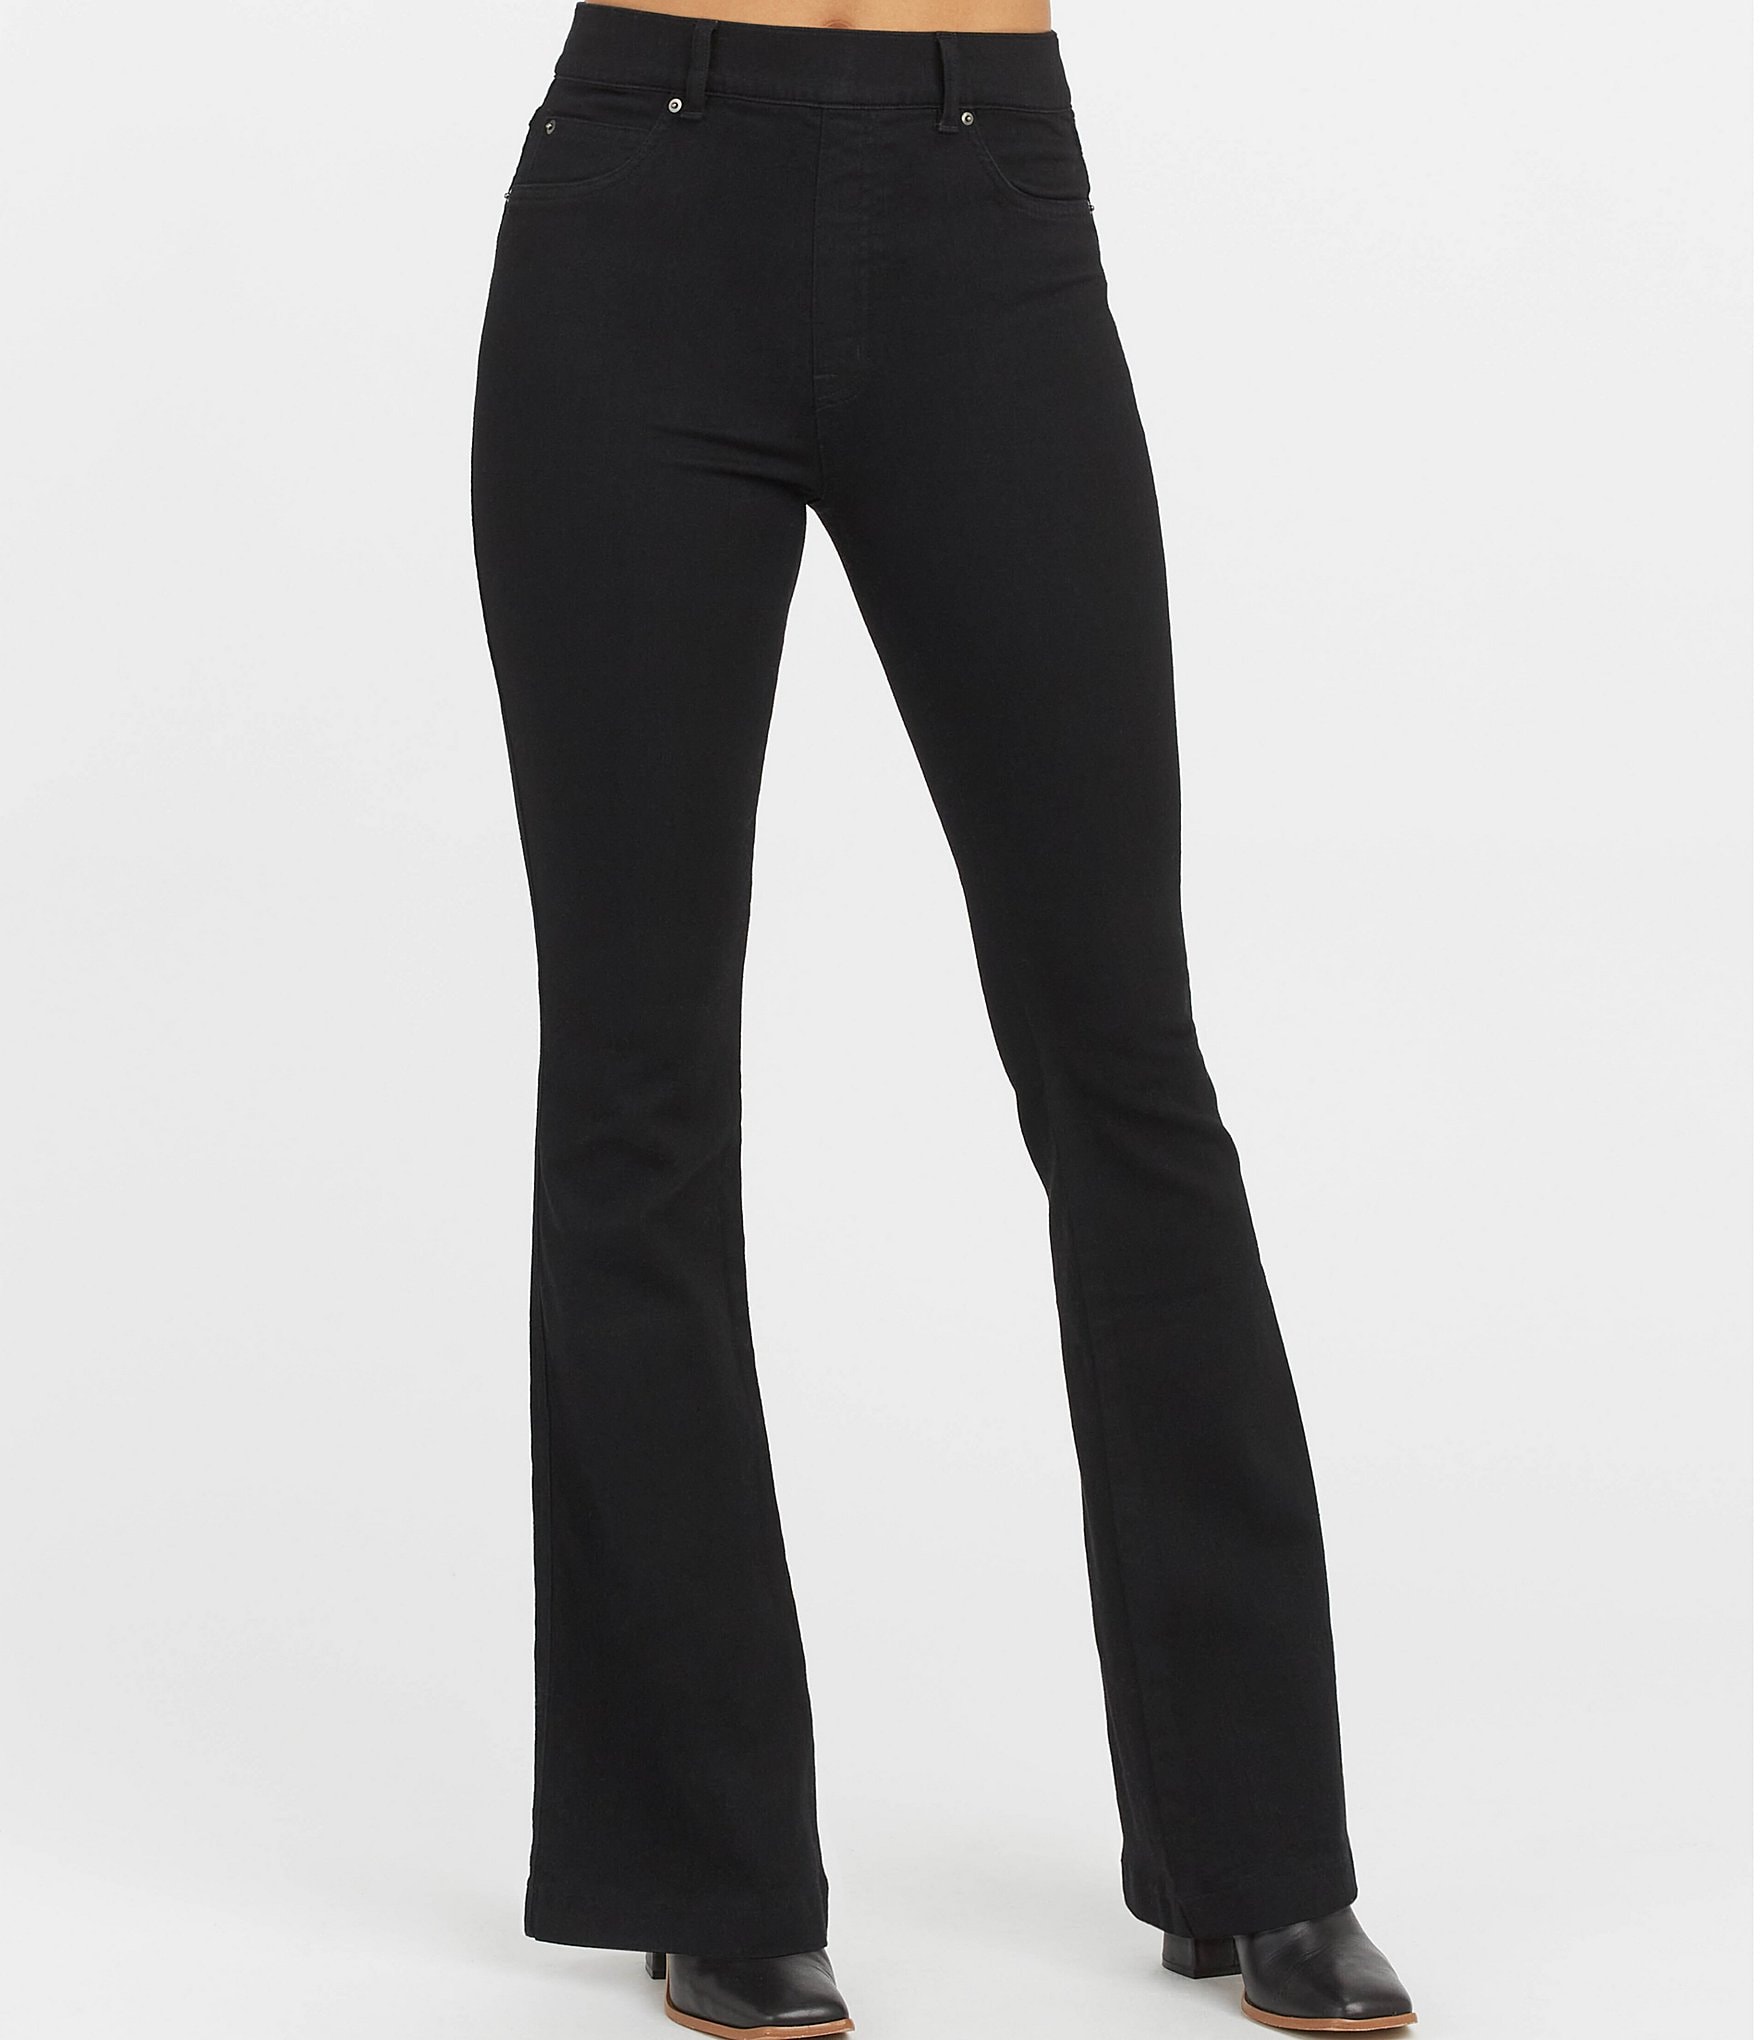 Women's Tight High Waist Jeans, Black Flare Pants Women